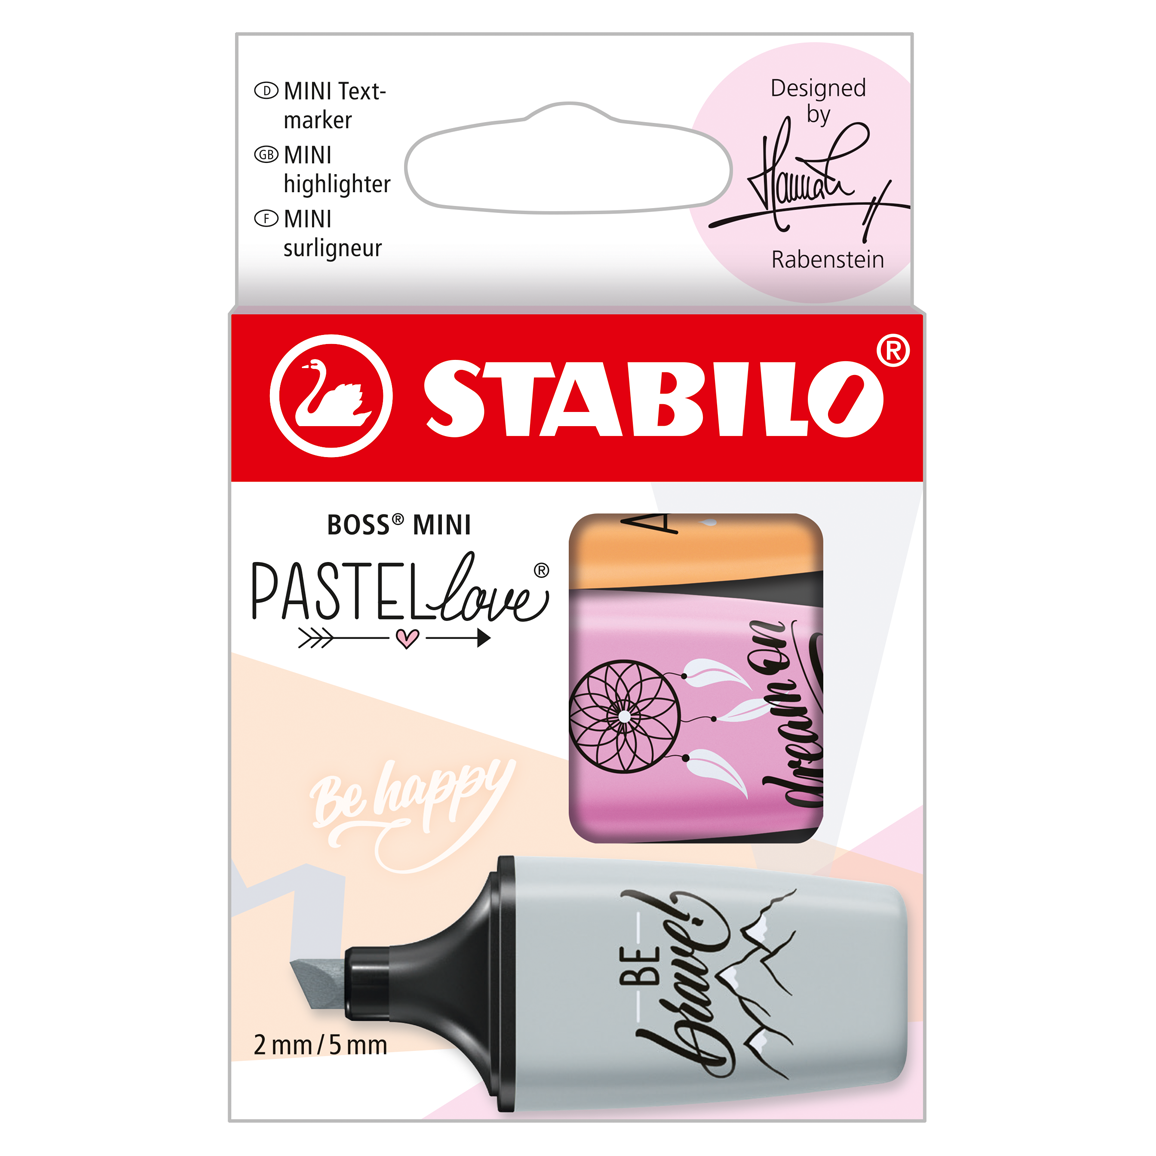 Wallet of 3 highlighters Stabilo BOSS MINI Pastel love Set #1 - Quo Vadis